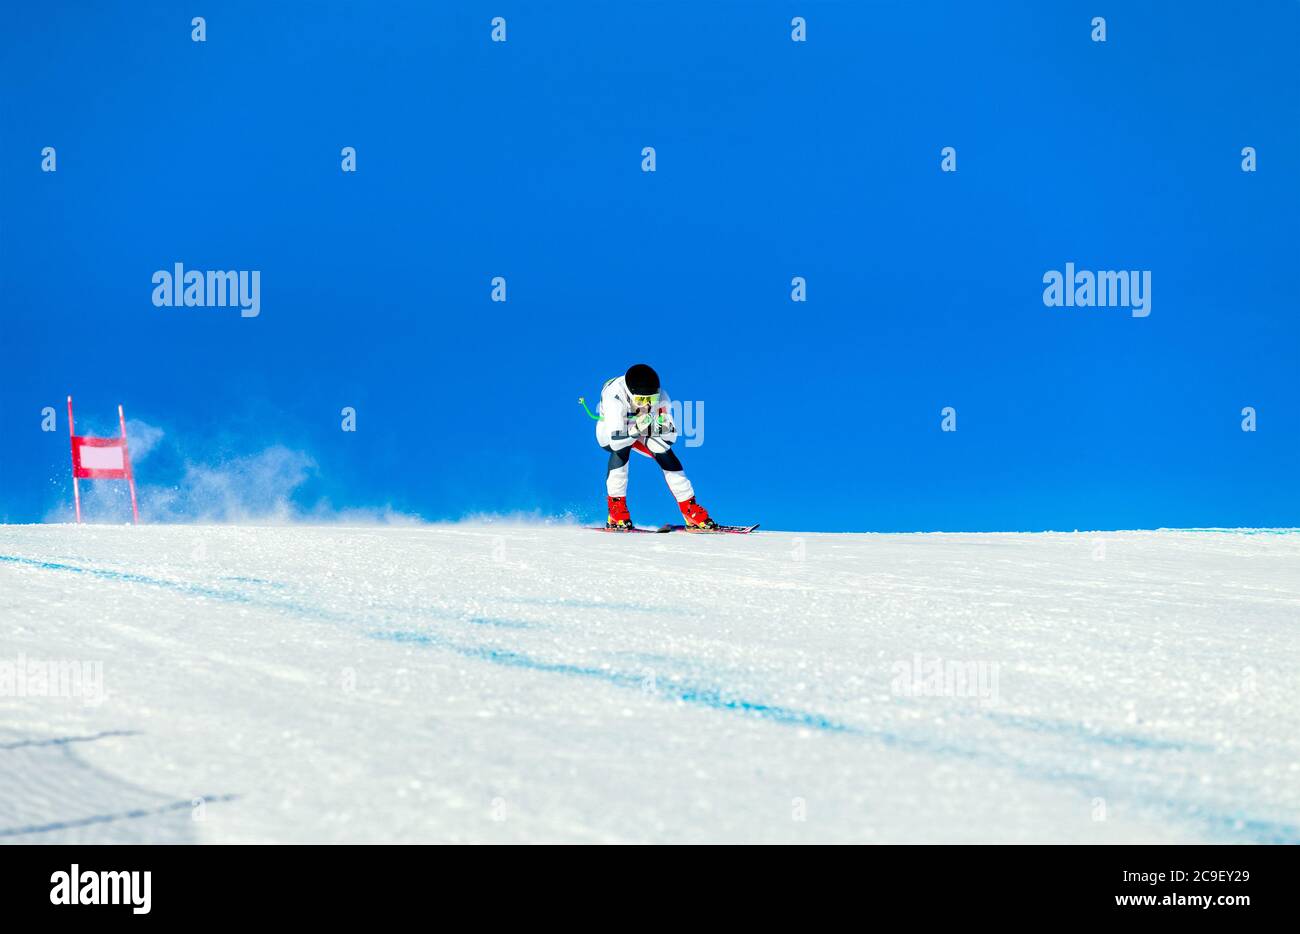 alpine skiing race in on track of giant slalom Stock Photo